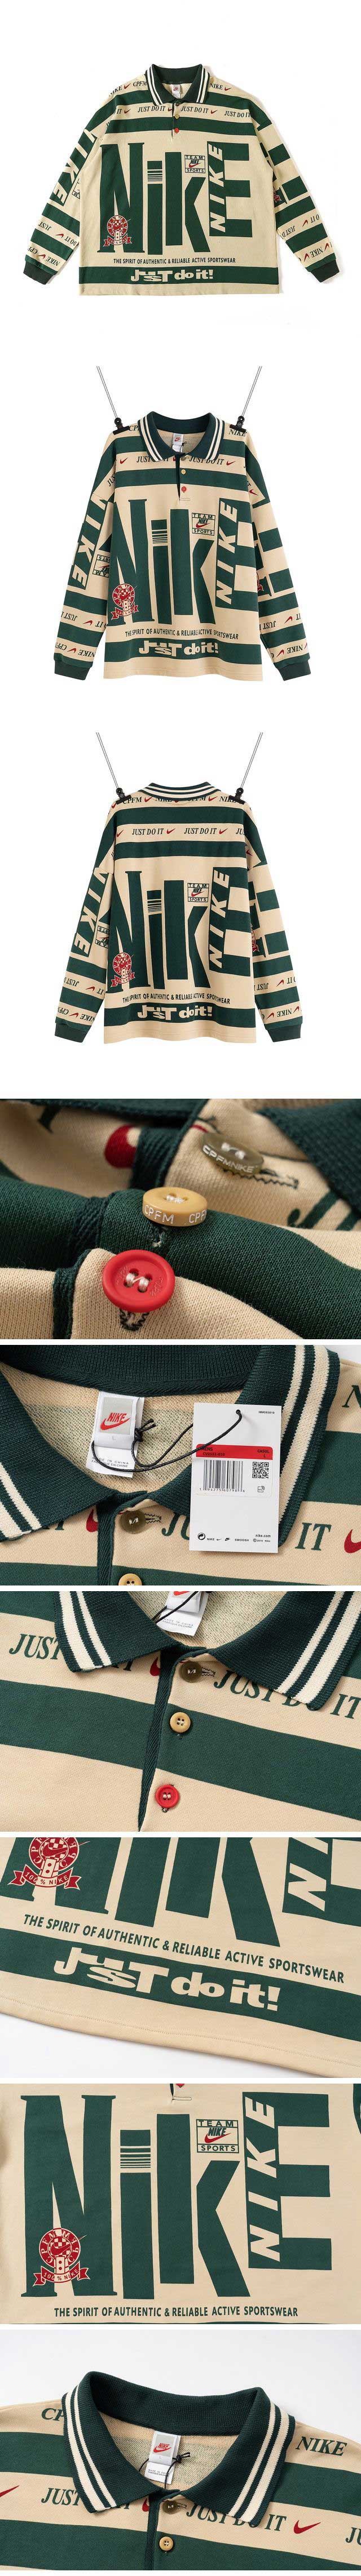 Nike x Cactas Plant Flea Market CPFM Polo Shirt ナイキ x カクタスプラントフリーマーケット ポロシャツ